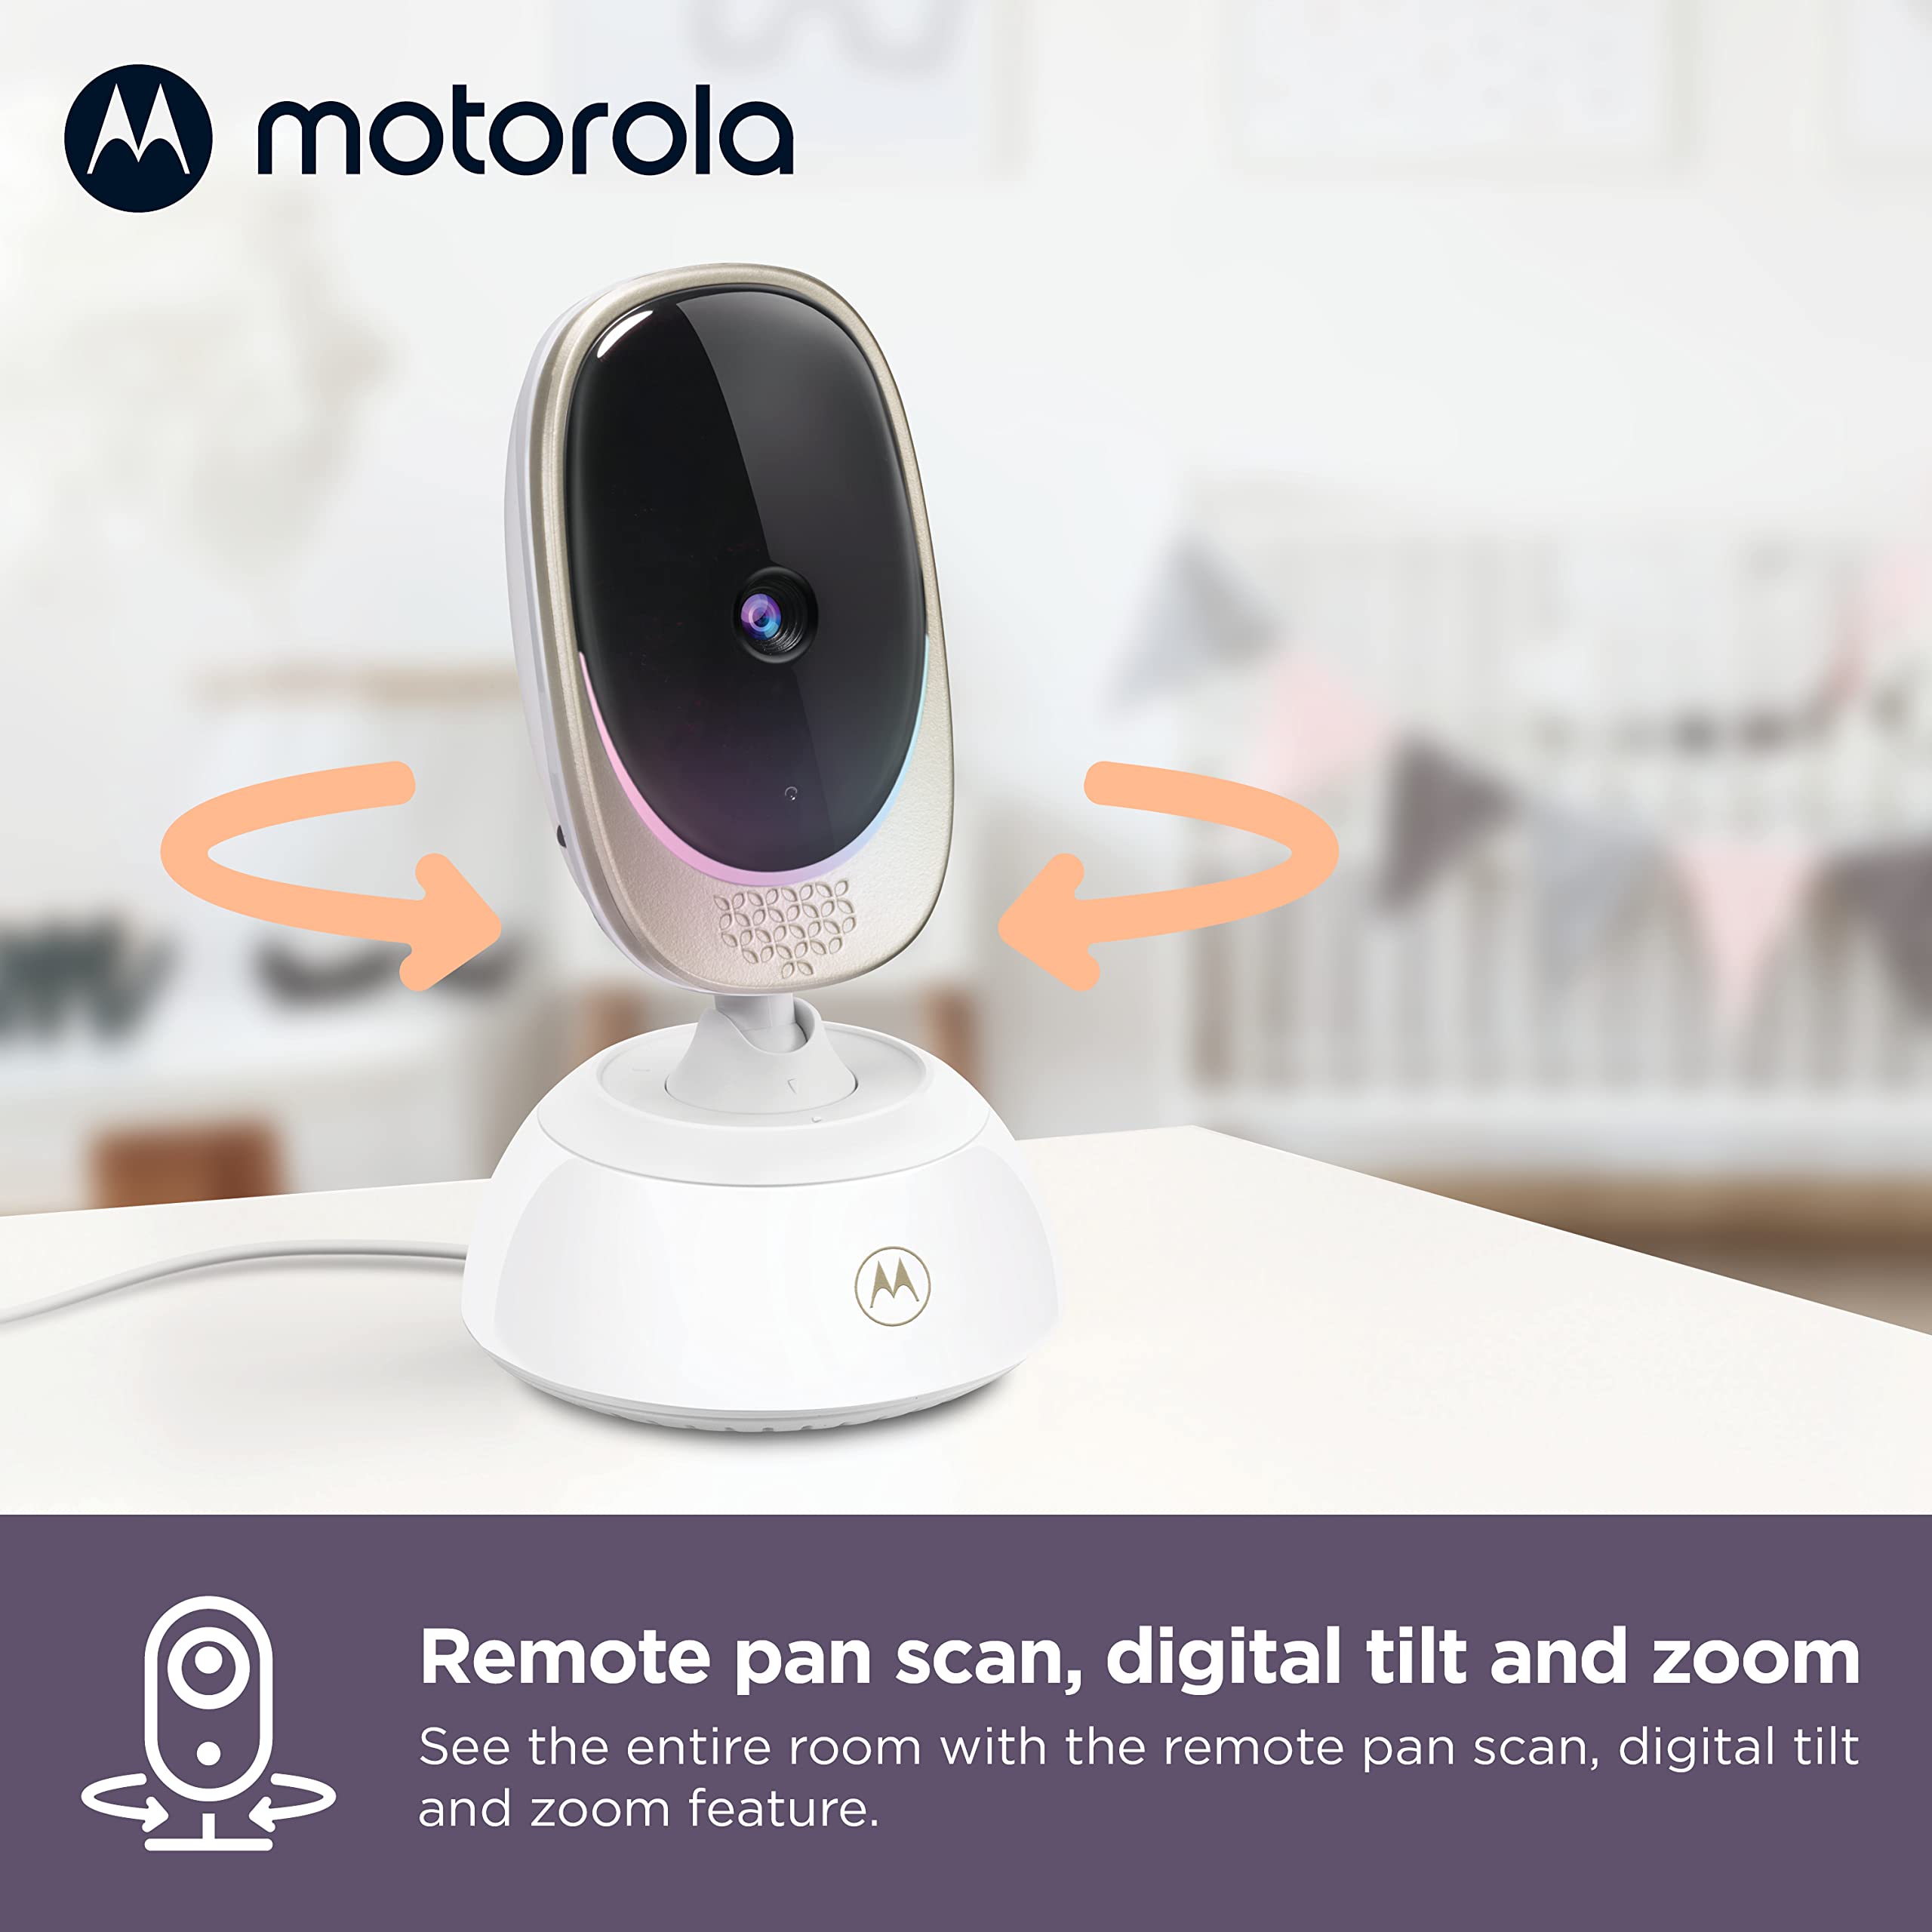 Motorola Baby Monitor VM85-5 WiFi Video Baby Monitor with Camera & Mood Light - Connects to Nursery App, 1000ft Range, 2-Way Audio, Remote Pan, Digital Tilt-Zoom, Temp, Lullabies, Night Vision